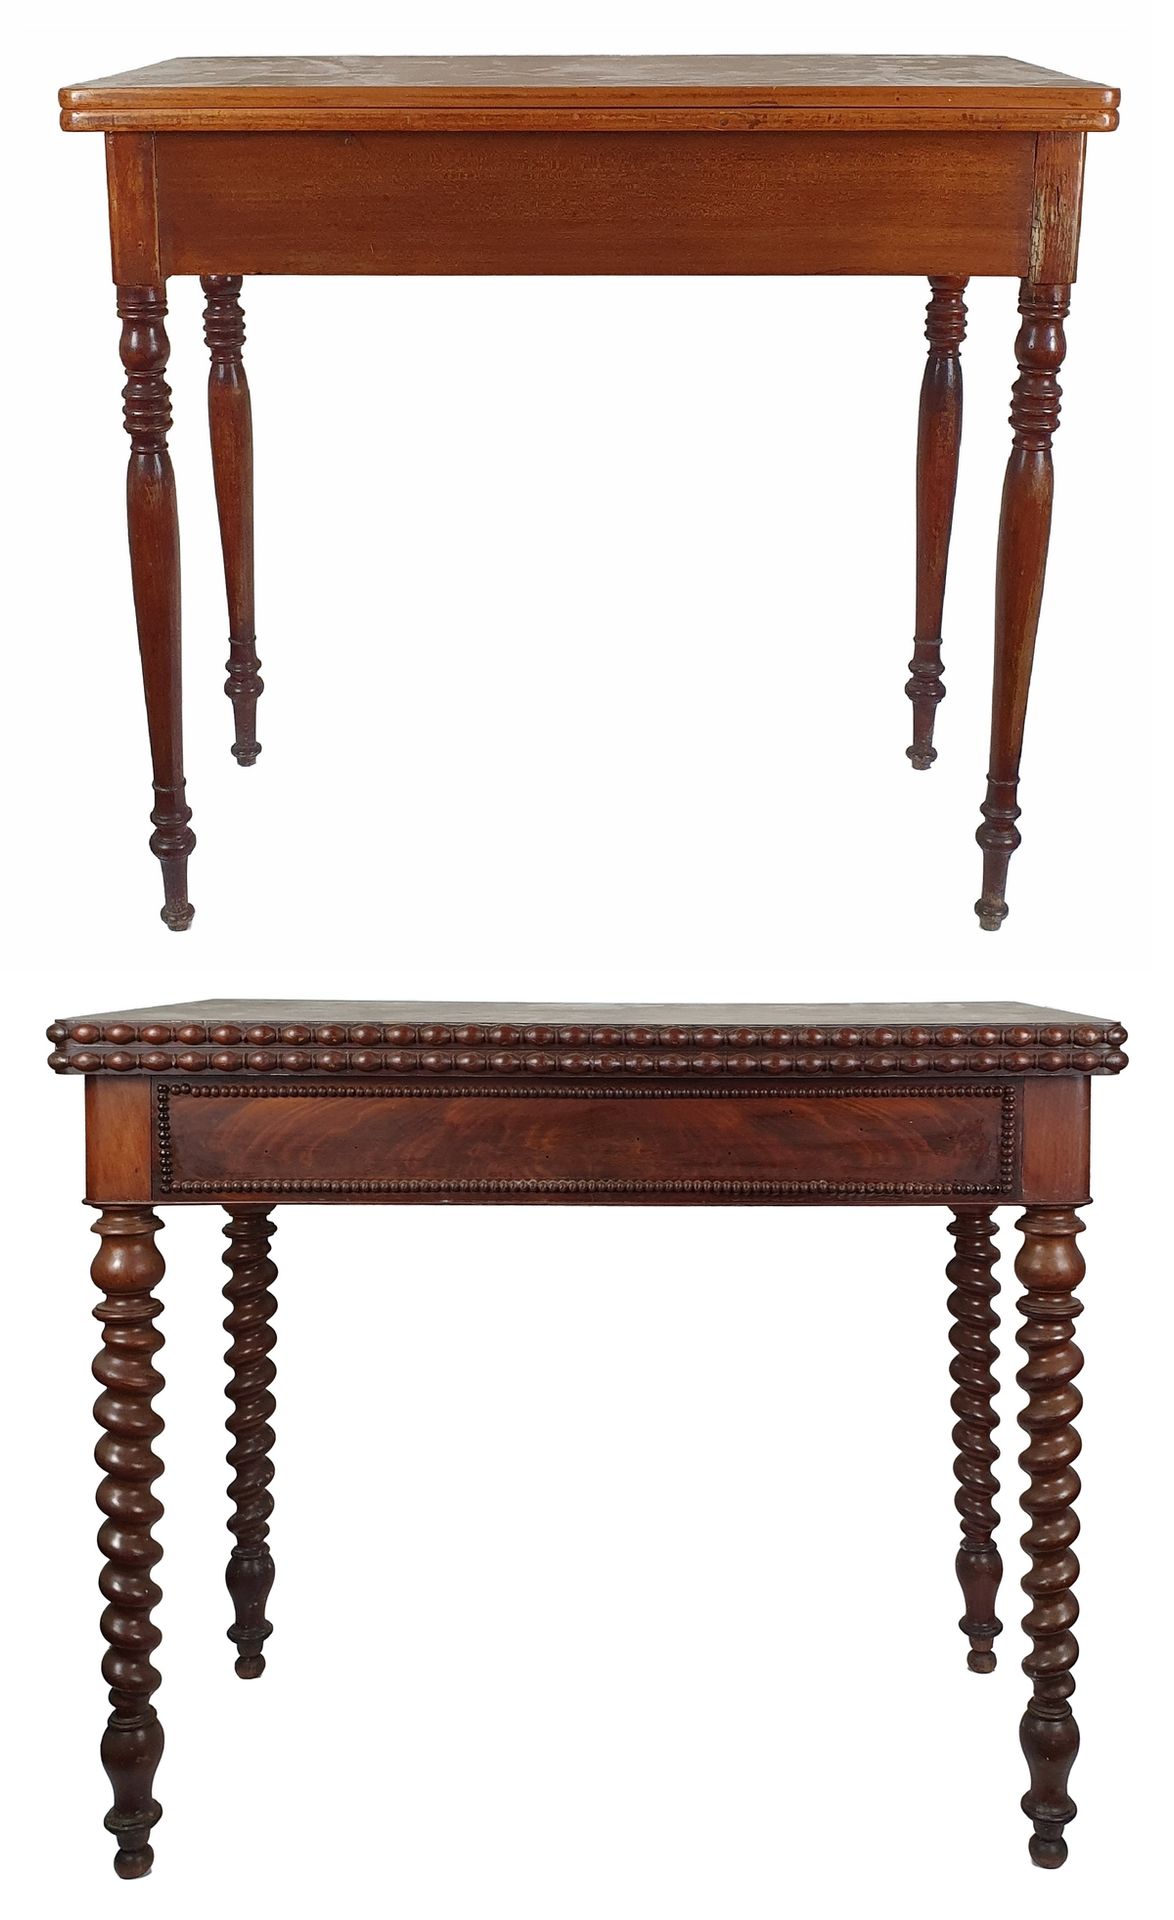 TABLES A JEUX ca.1900 
一个是桃花心木的，开在游戏桌上，另一个也是桃花心木的，腿是转动的。两张桌子的地毯都不见了。

关闭时的尺寸：75 &hellip;